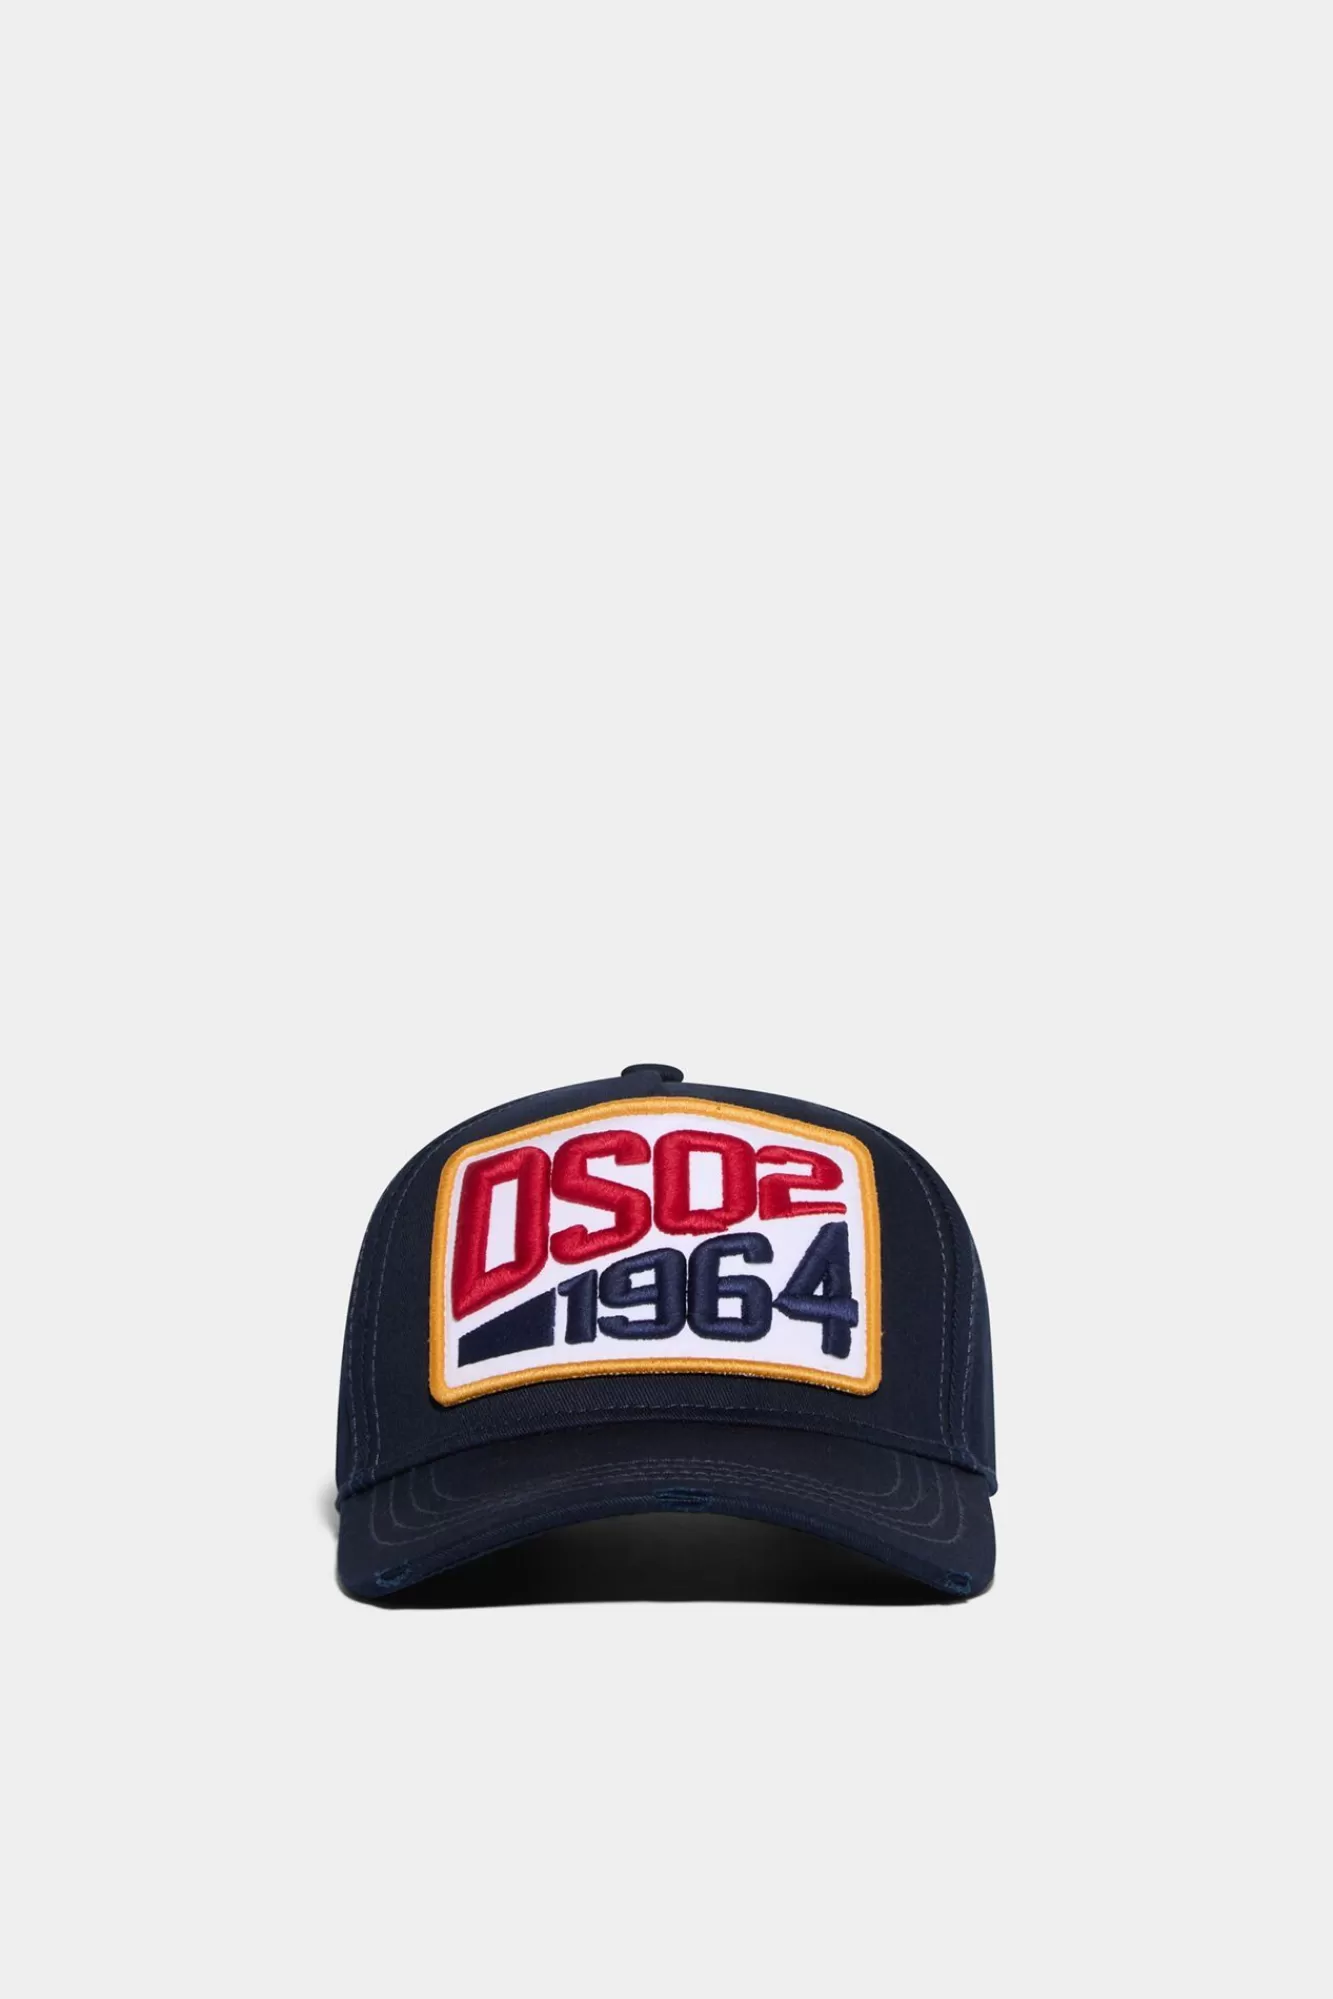 Dsq2 Baseball Cap<Dsquared2 Discount